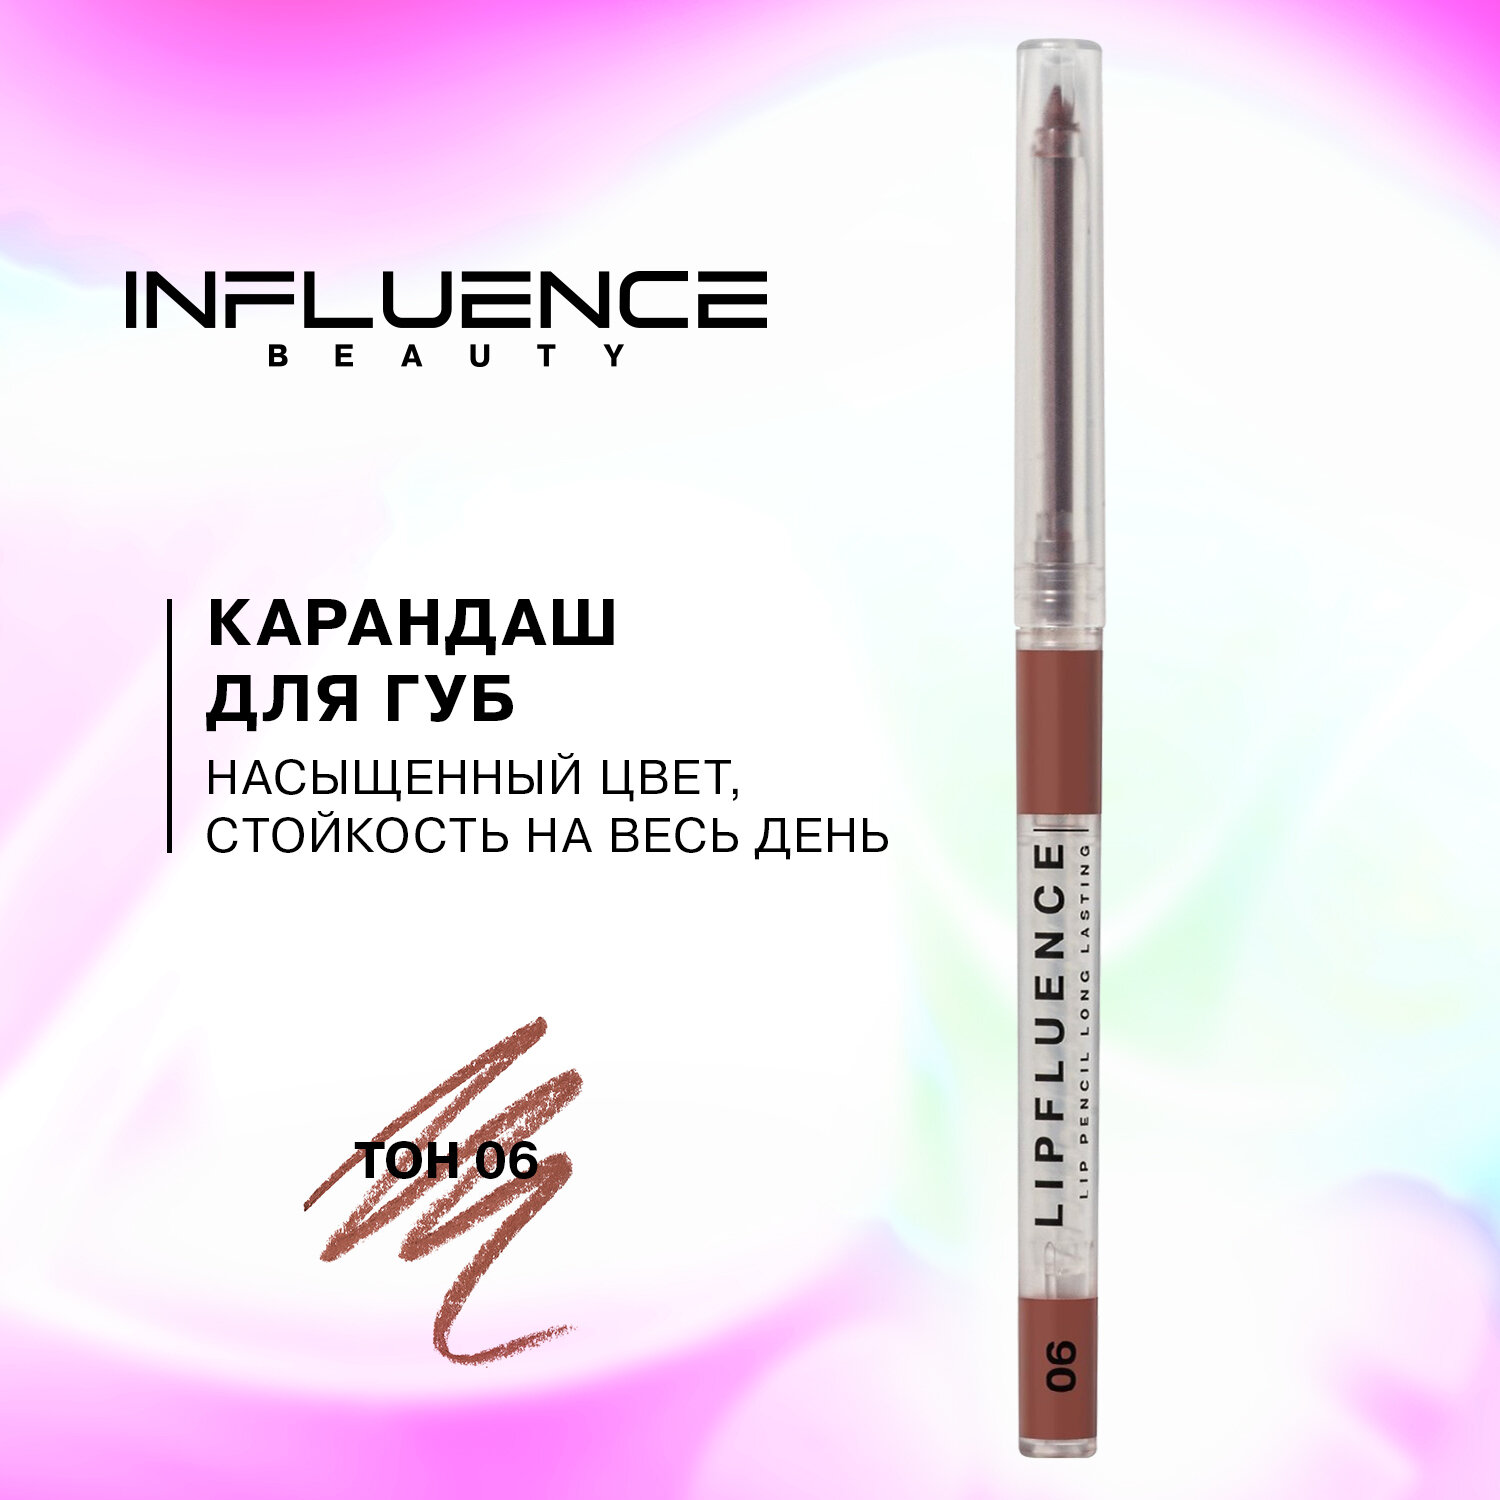 Influence Beauty Карандаш для губ автоматический Lipfluence/Automatic lip pencil тон/shade 06